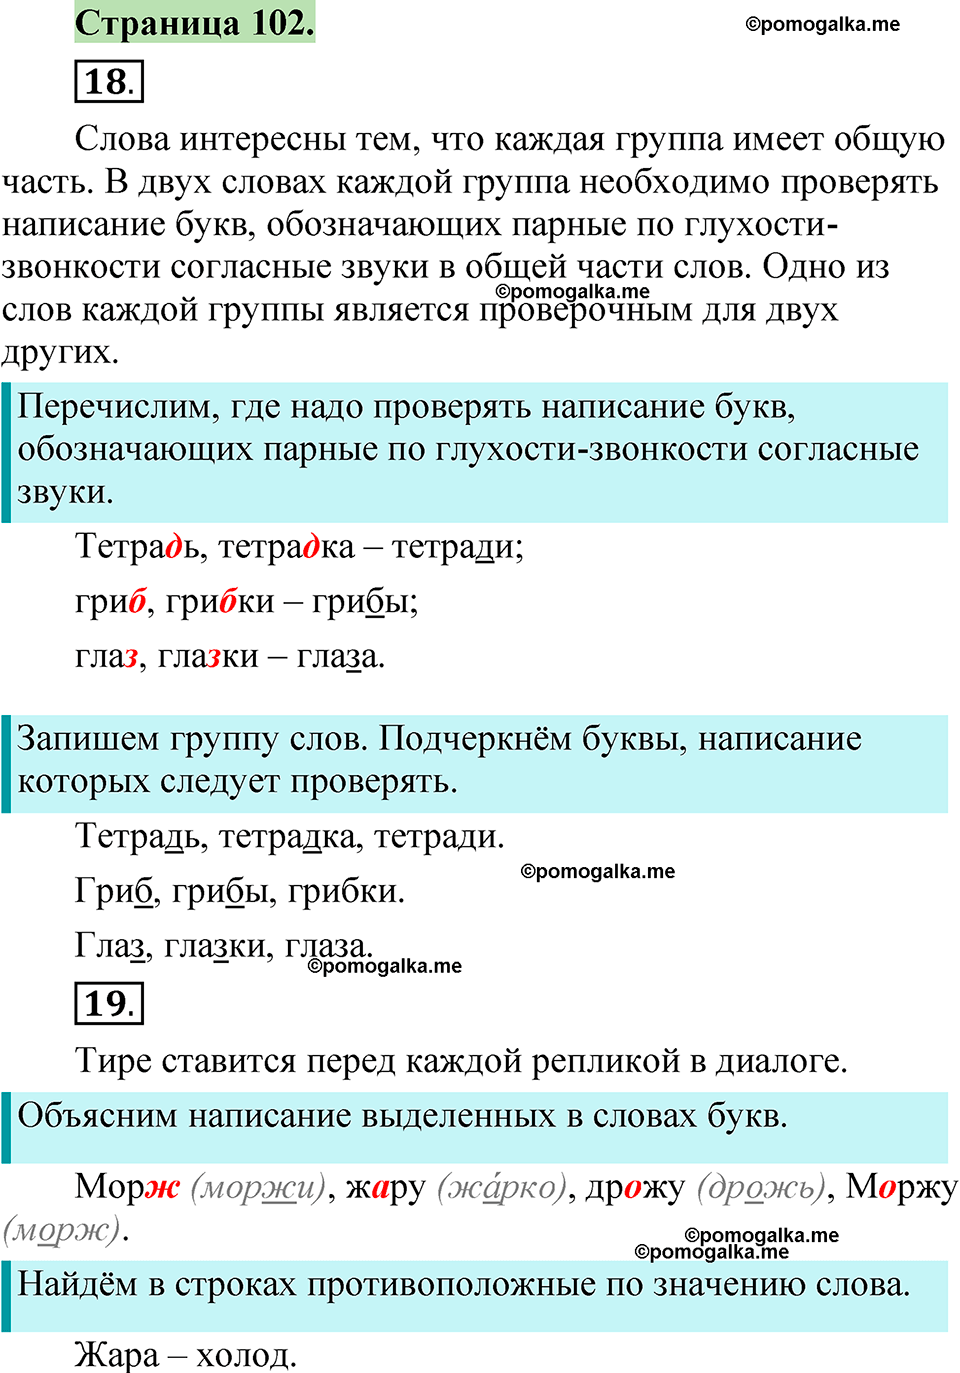 страница 102 русский язык 1 класс Канакина 2023